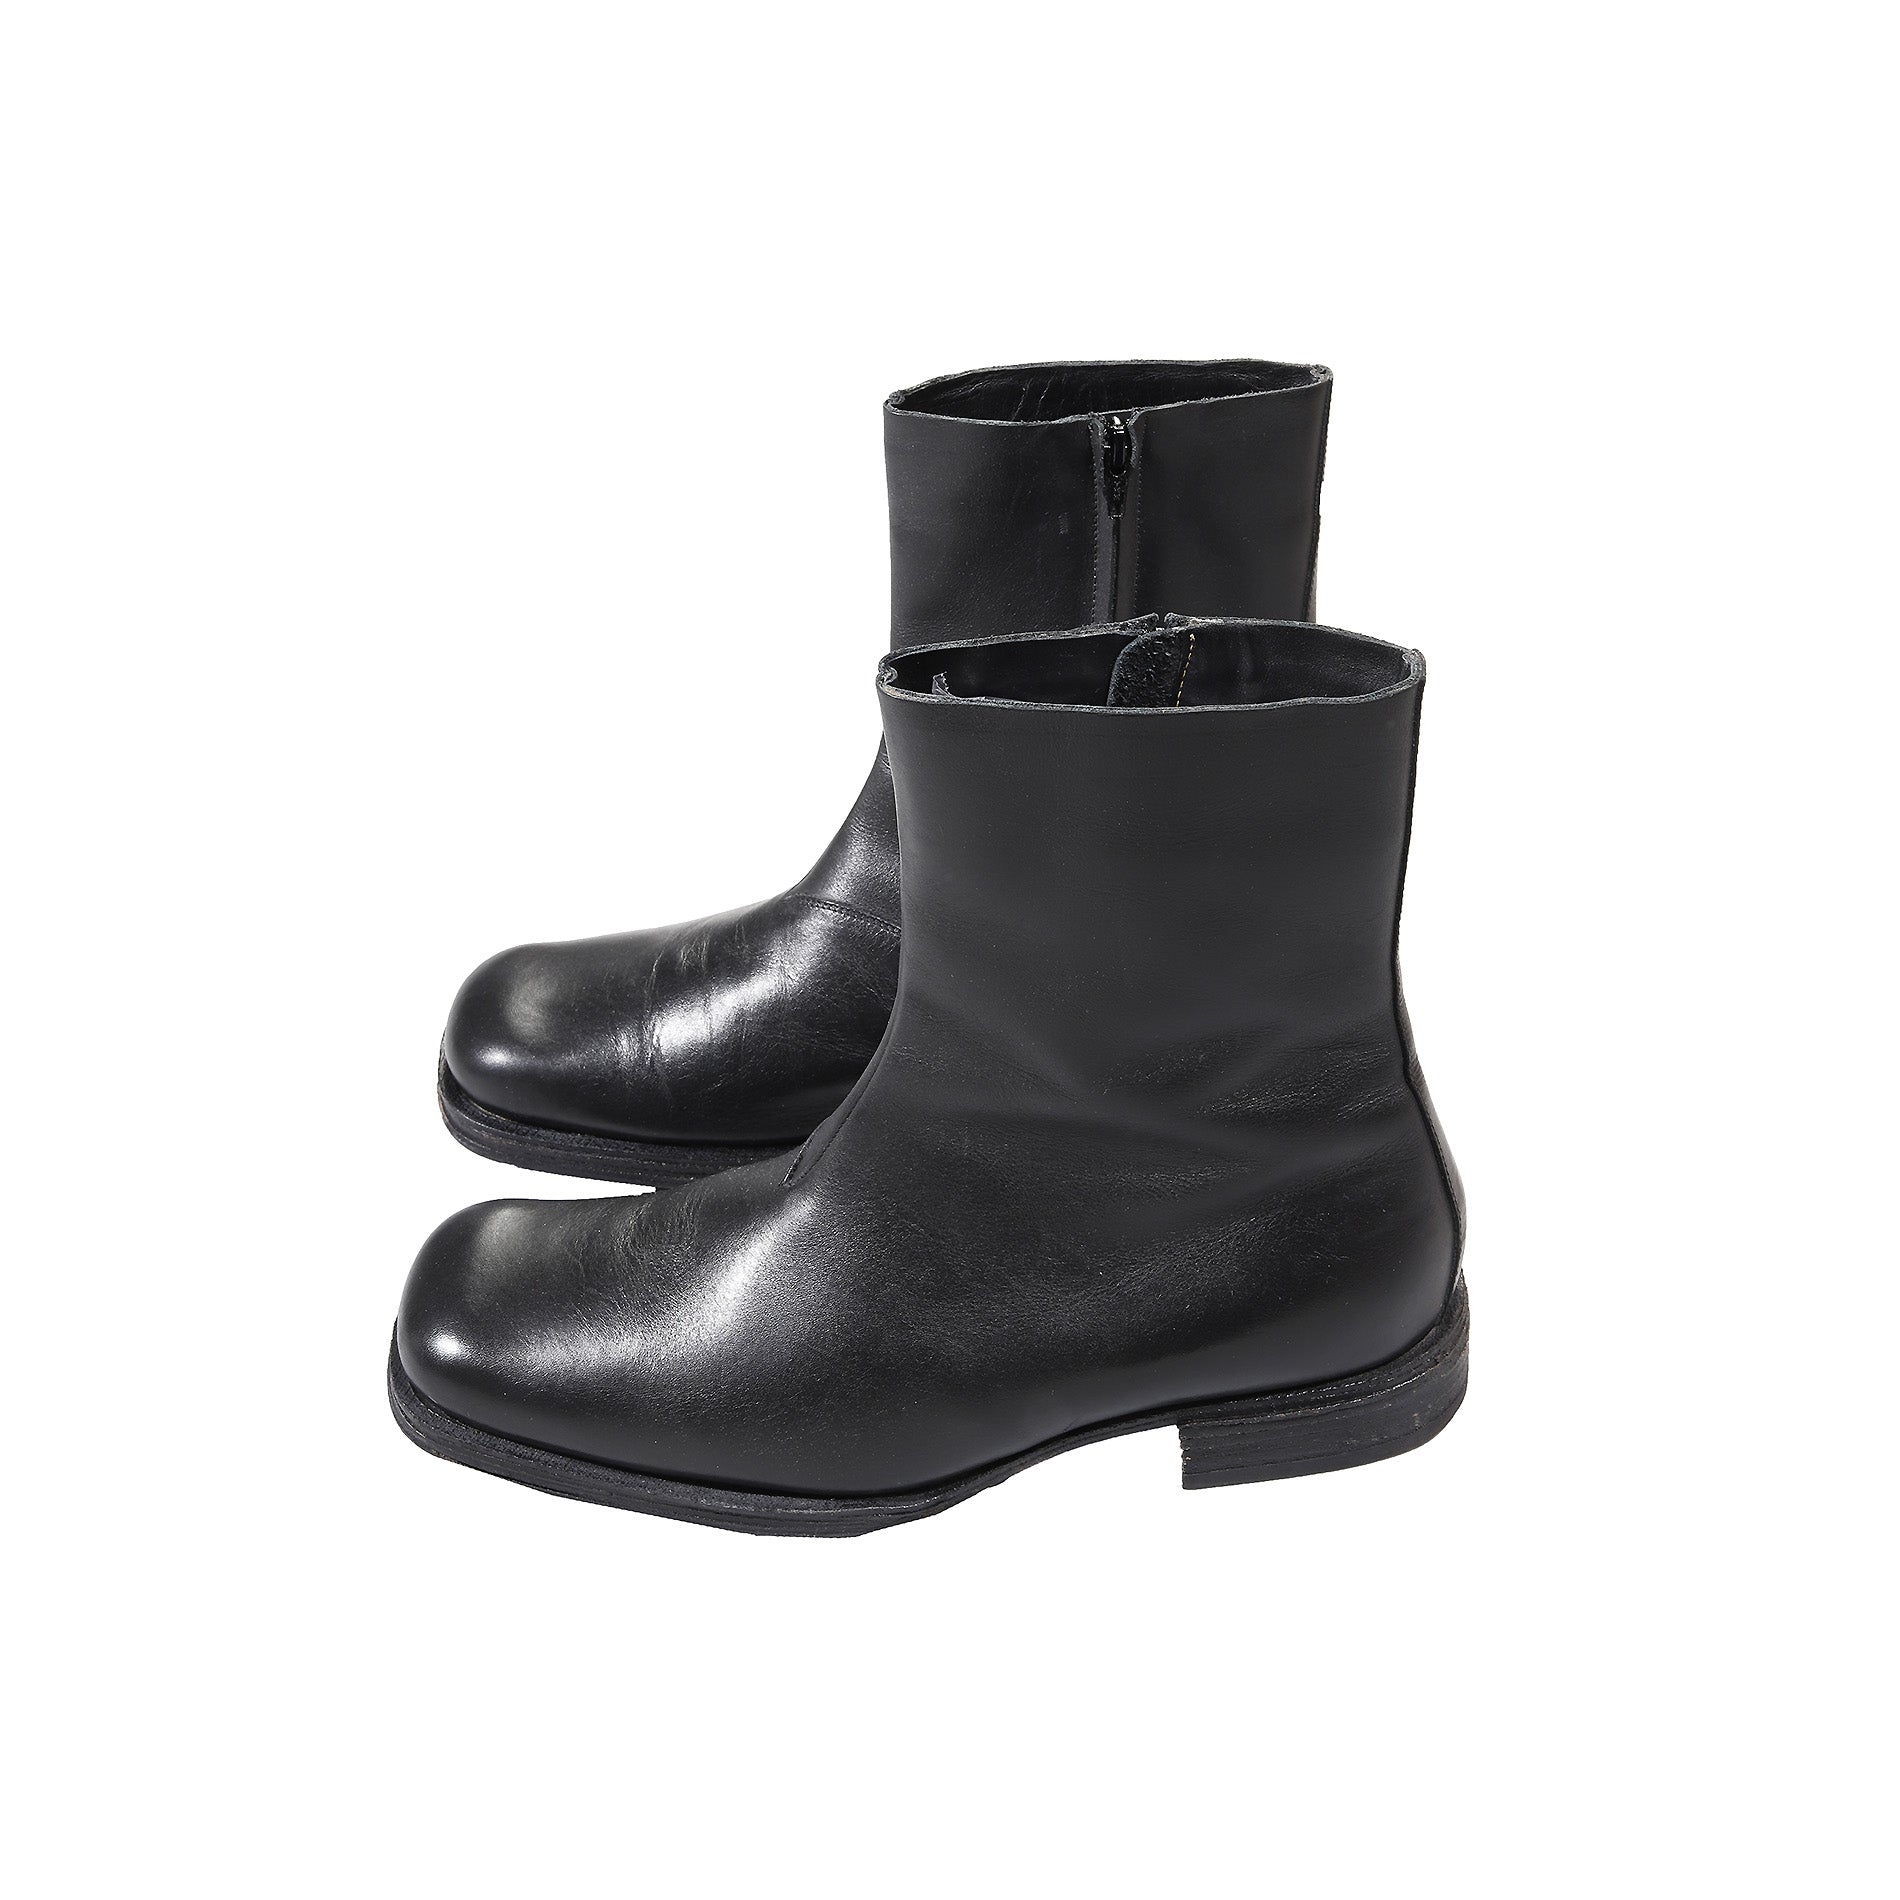 Maison Martin Margiela 2002 Artisanal Black Square Toe Leather Boots